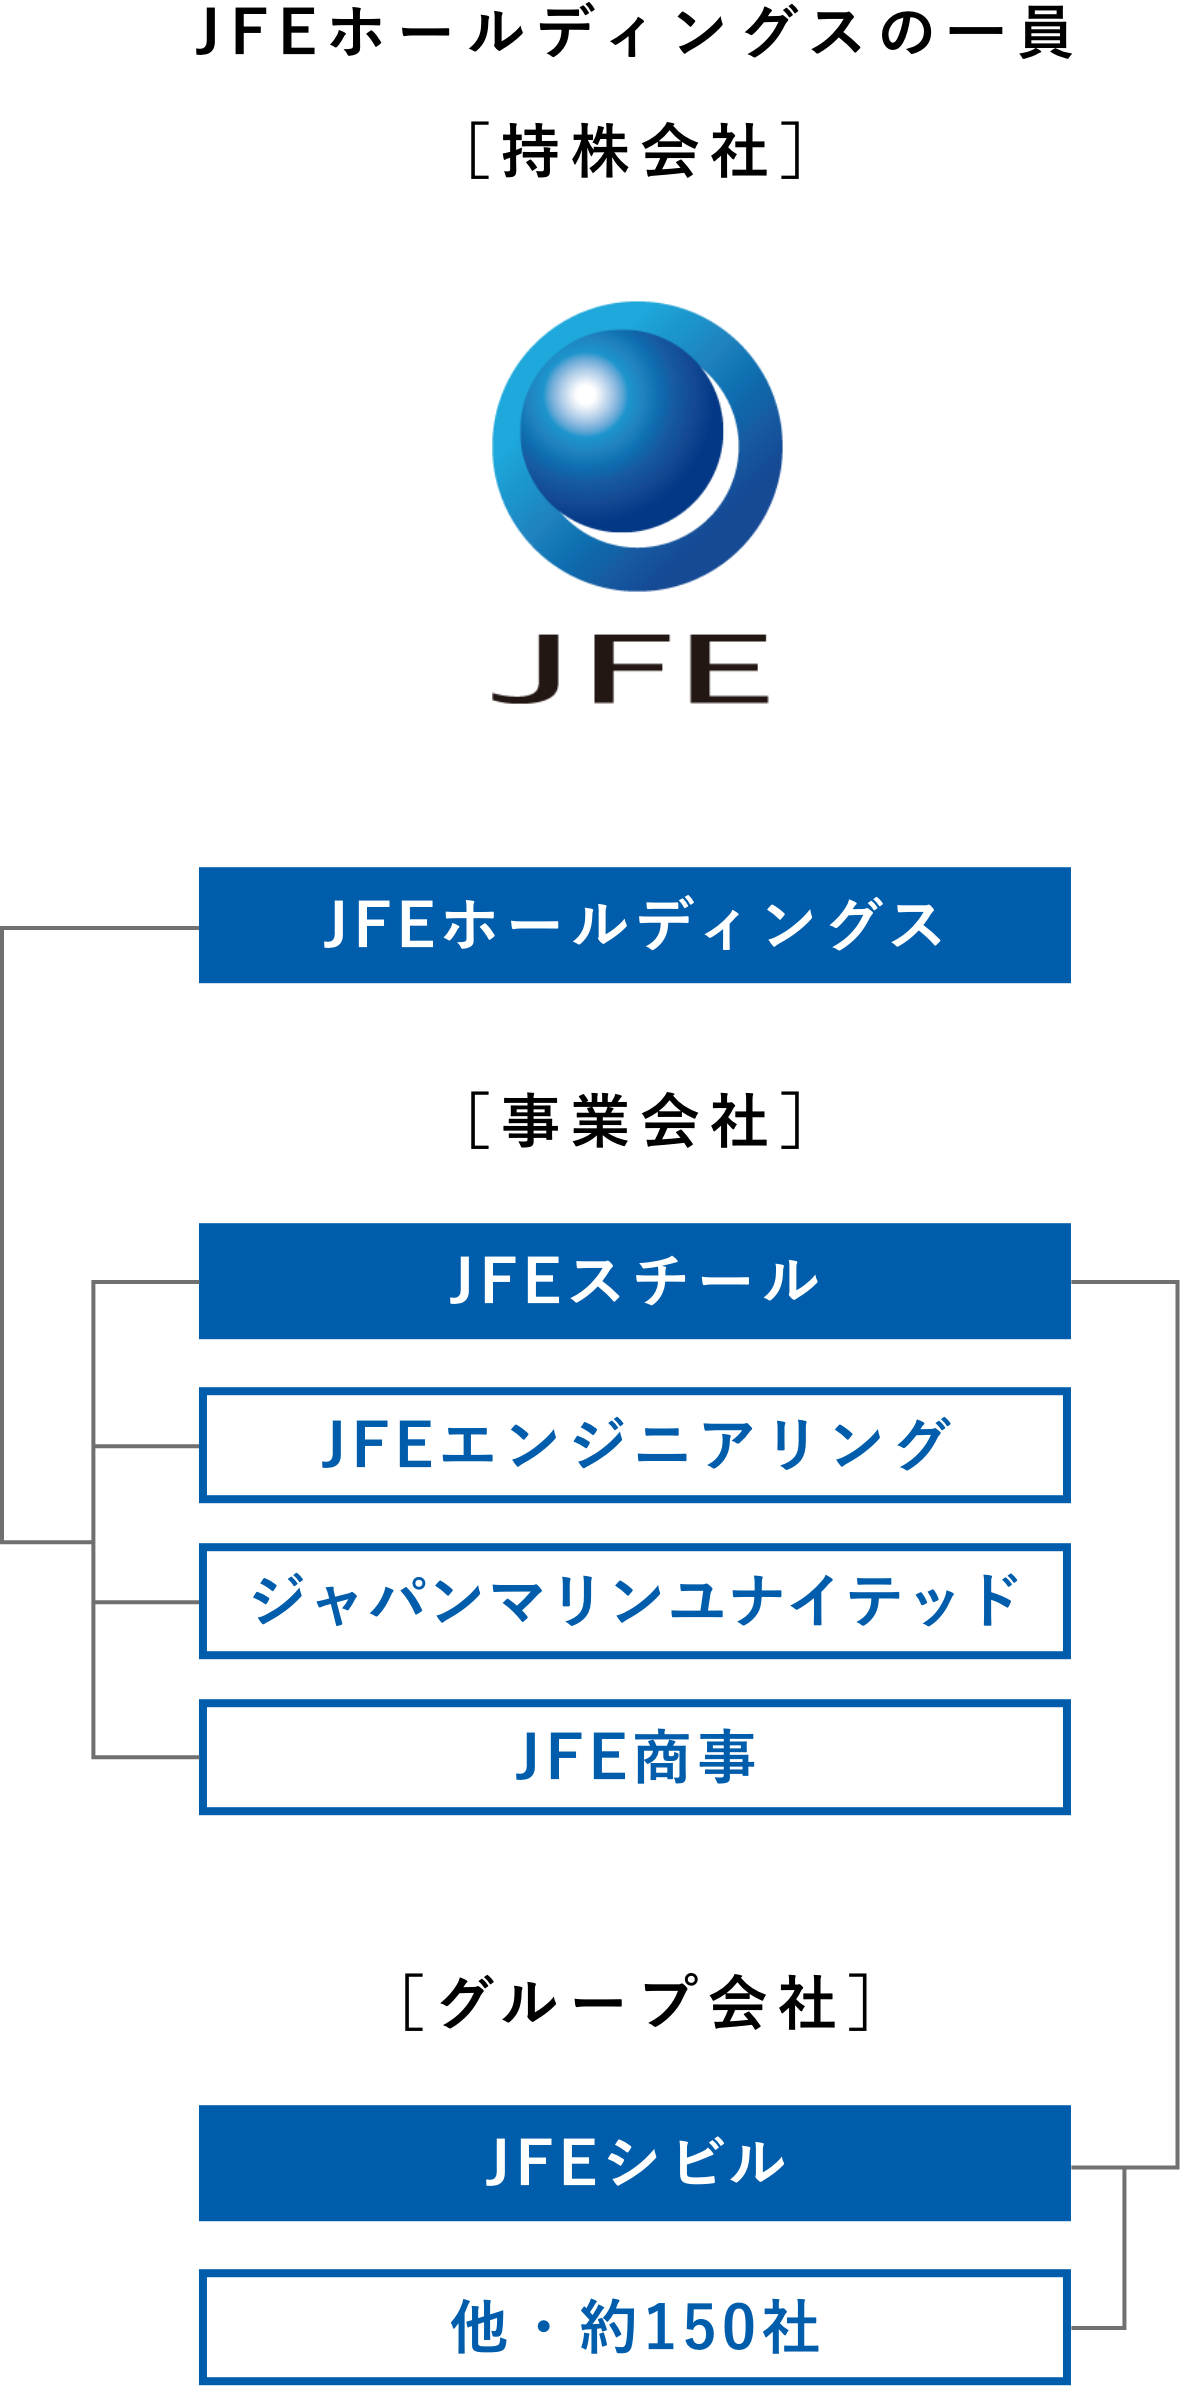 Jfeシビルを知る6つのポイント Jfe Civil Recruiting Jfeシビル株式会社